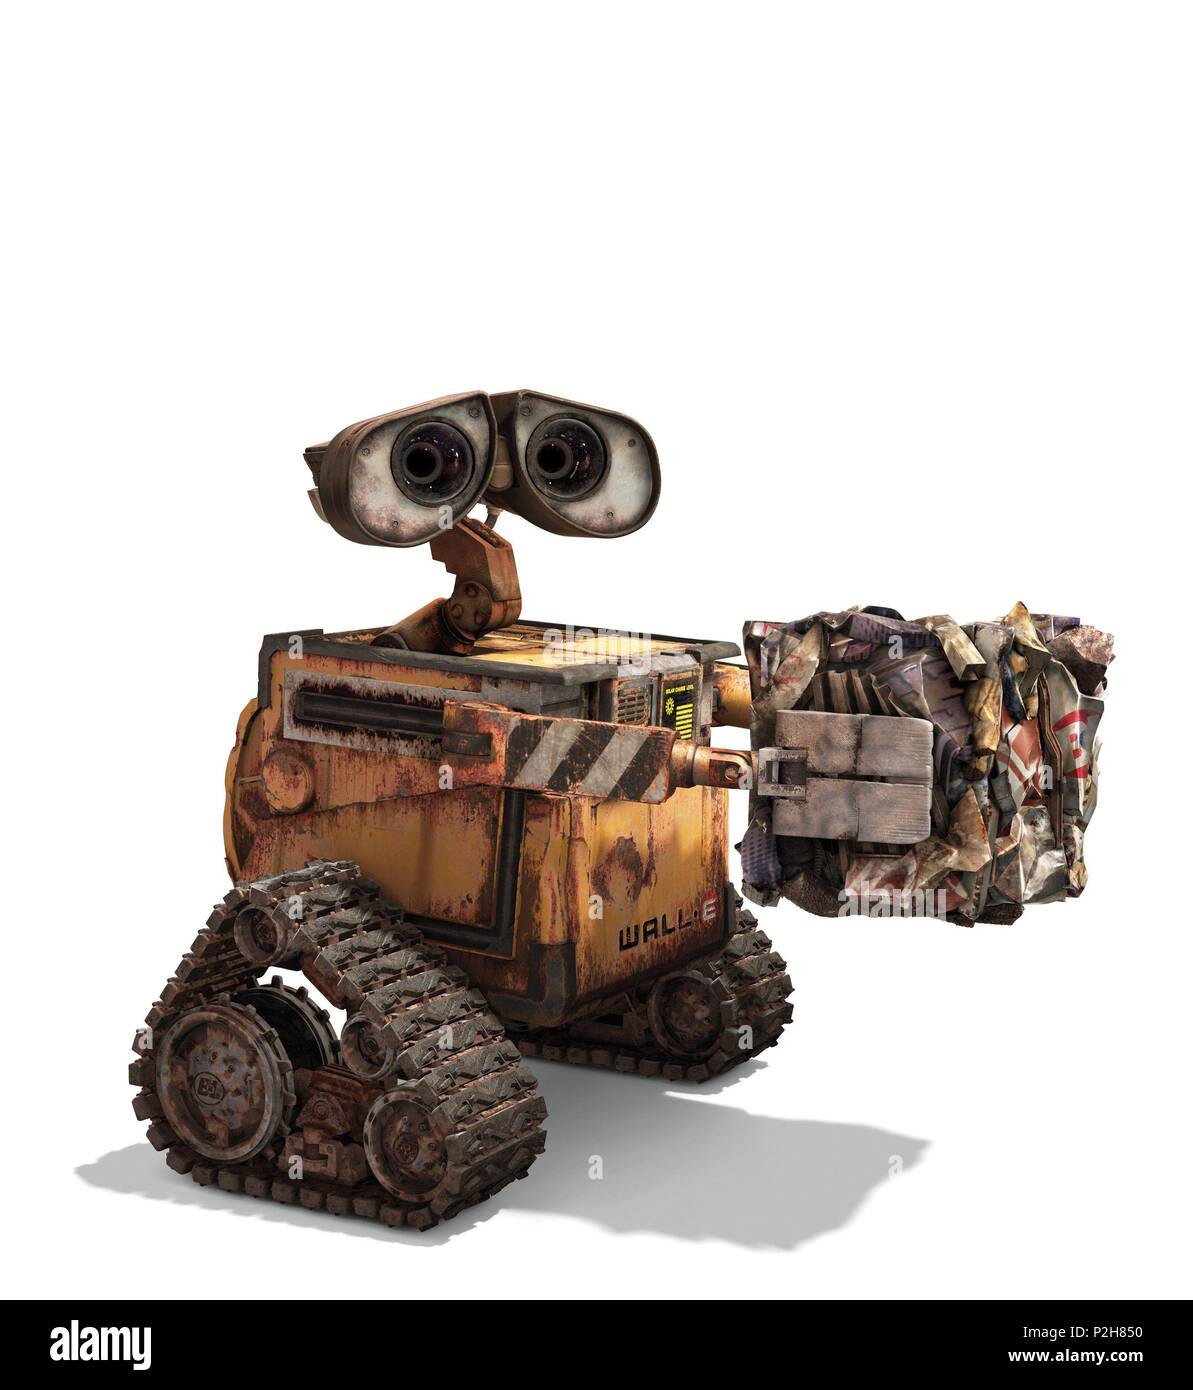 Original Film Titel: WALL·E. Englischer Titel: WALL·E. Regisseur: ANDREW STANTON. Jahr: 2008. Credit: Pixar Animation Studios / WALT DISNEY PICTURES/Album Stockfoto